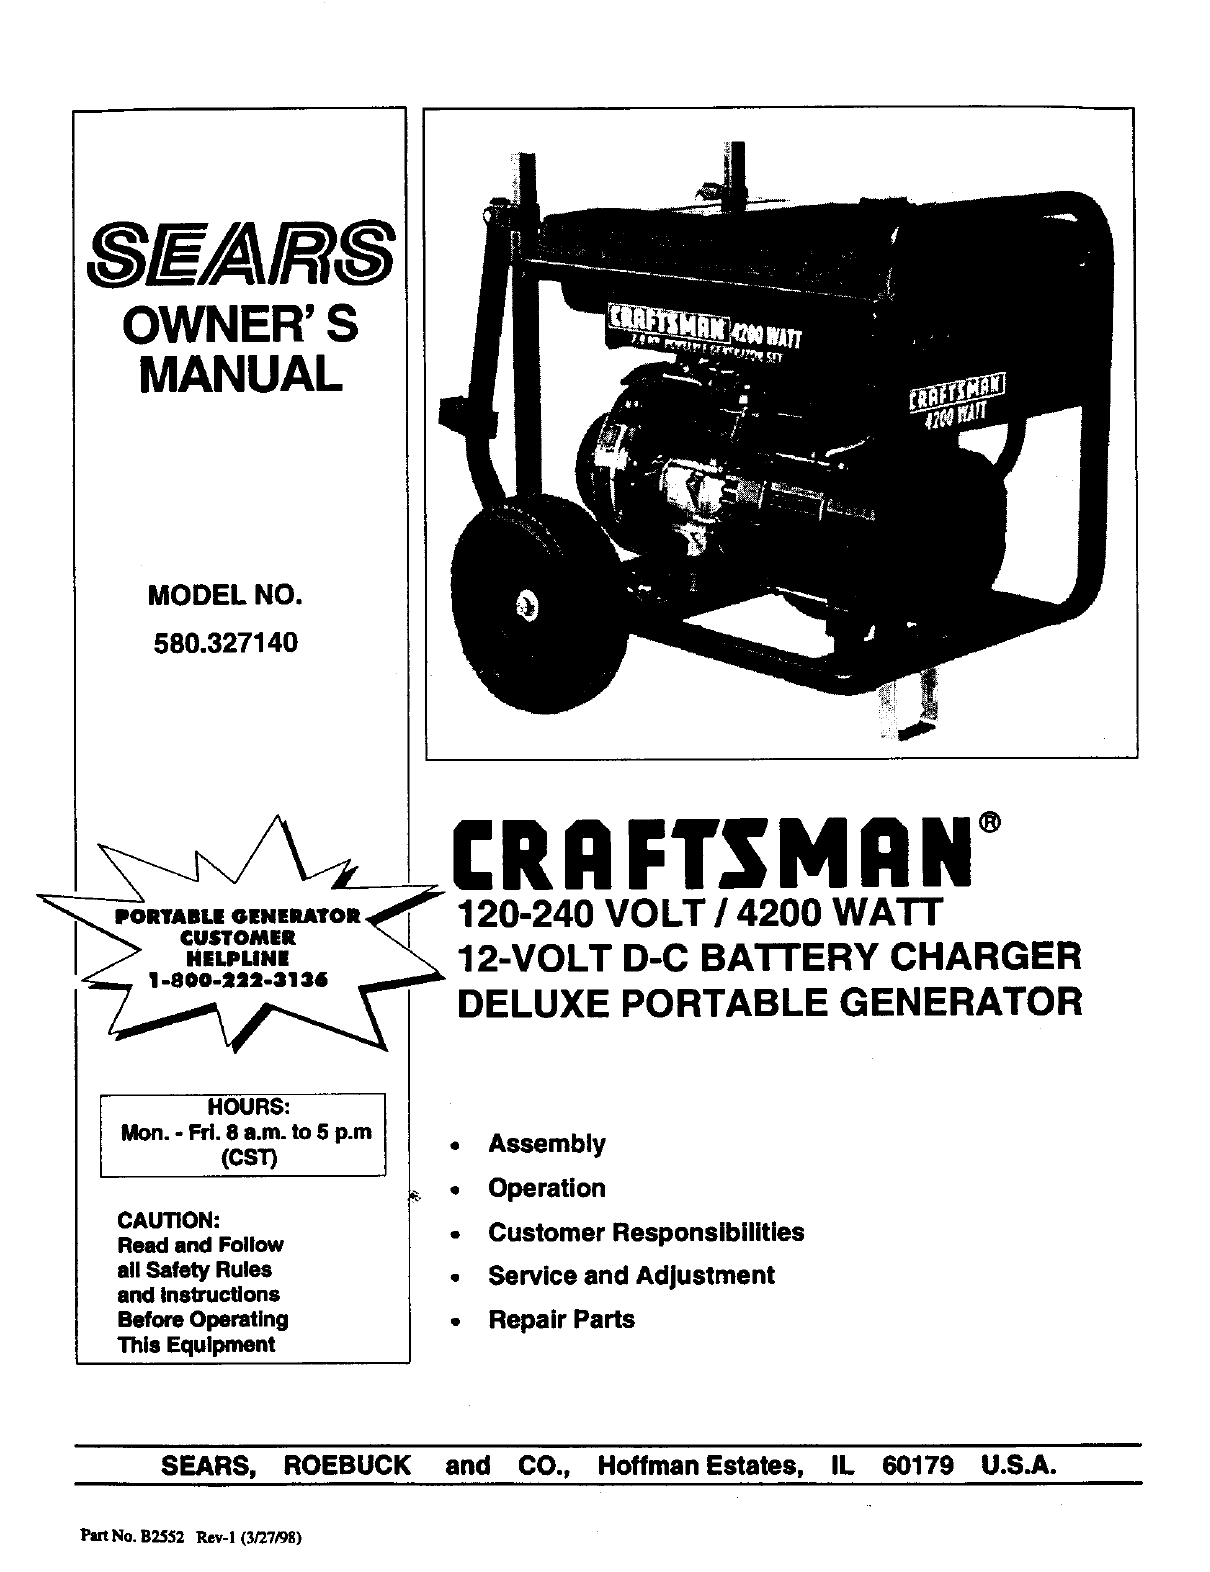 Owners Manual For Craftsman 4200 Power Generator